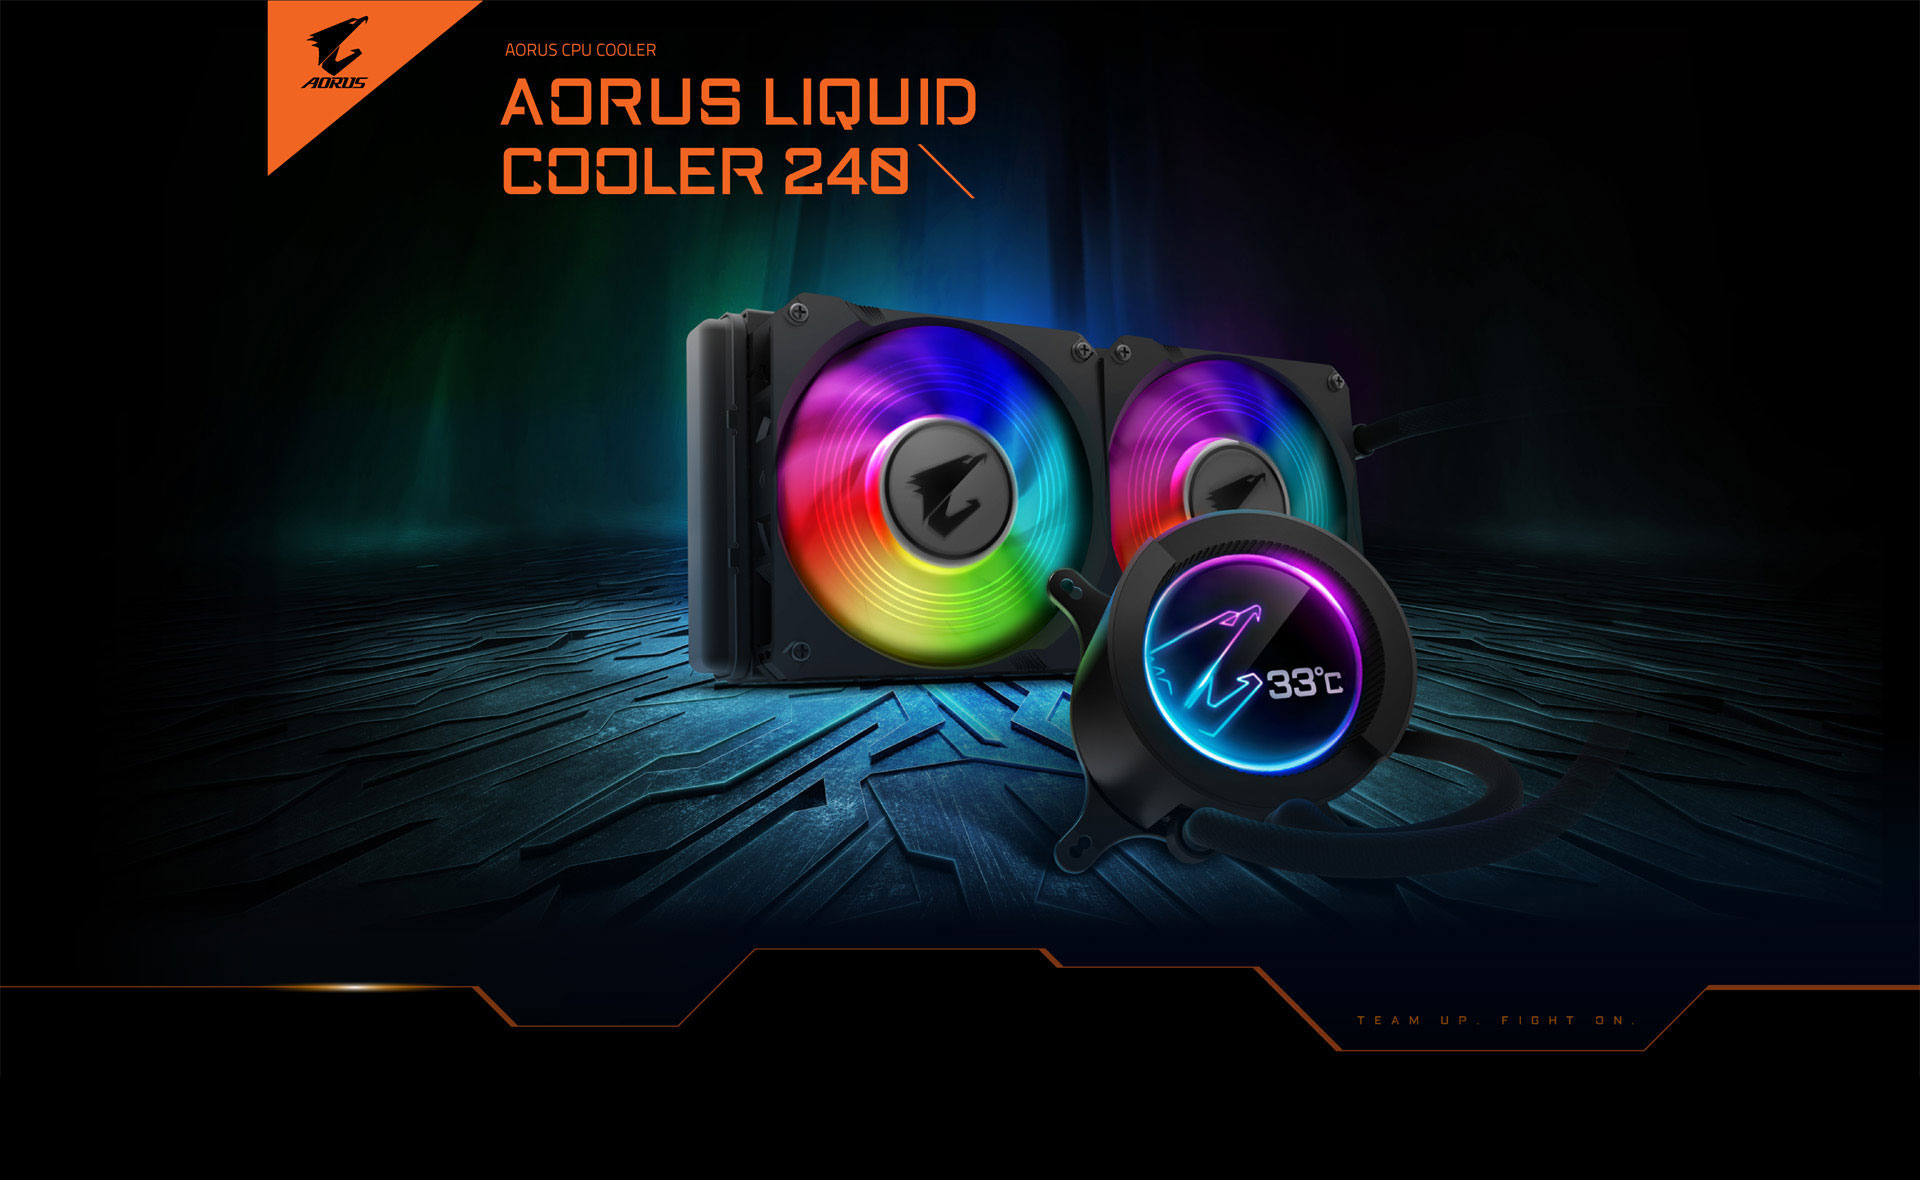 AORUS LIQUID COOLER 240 Key Features 